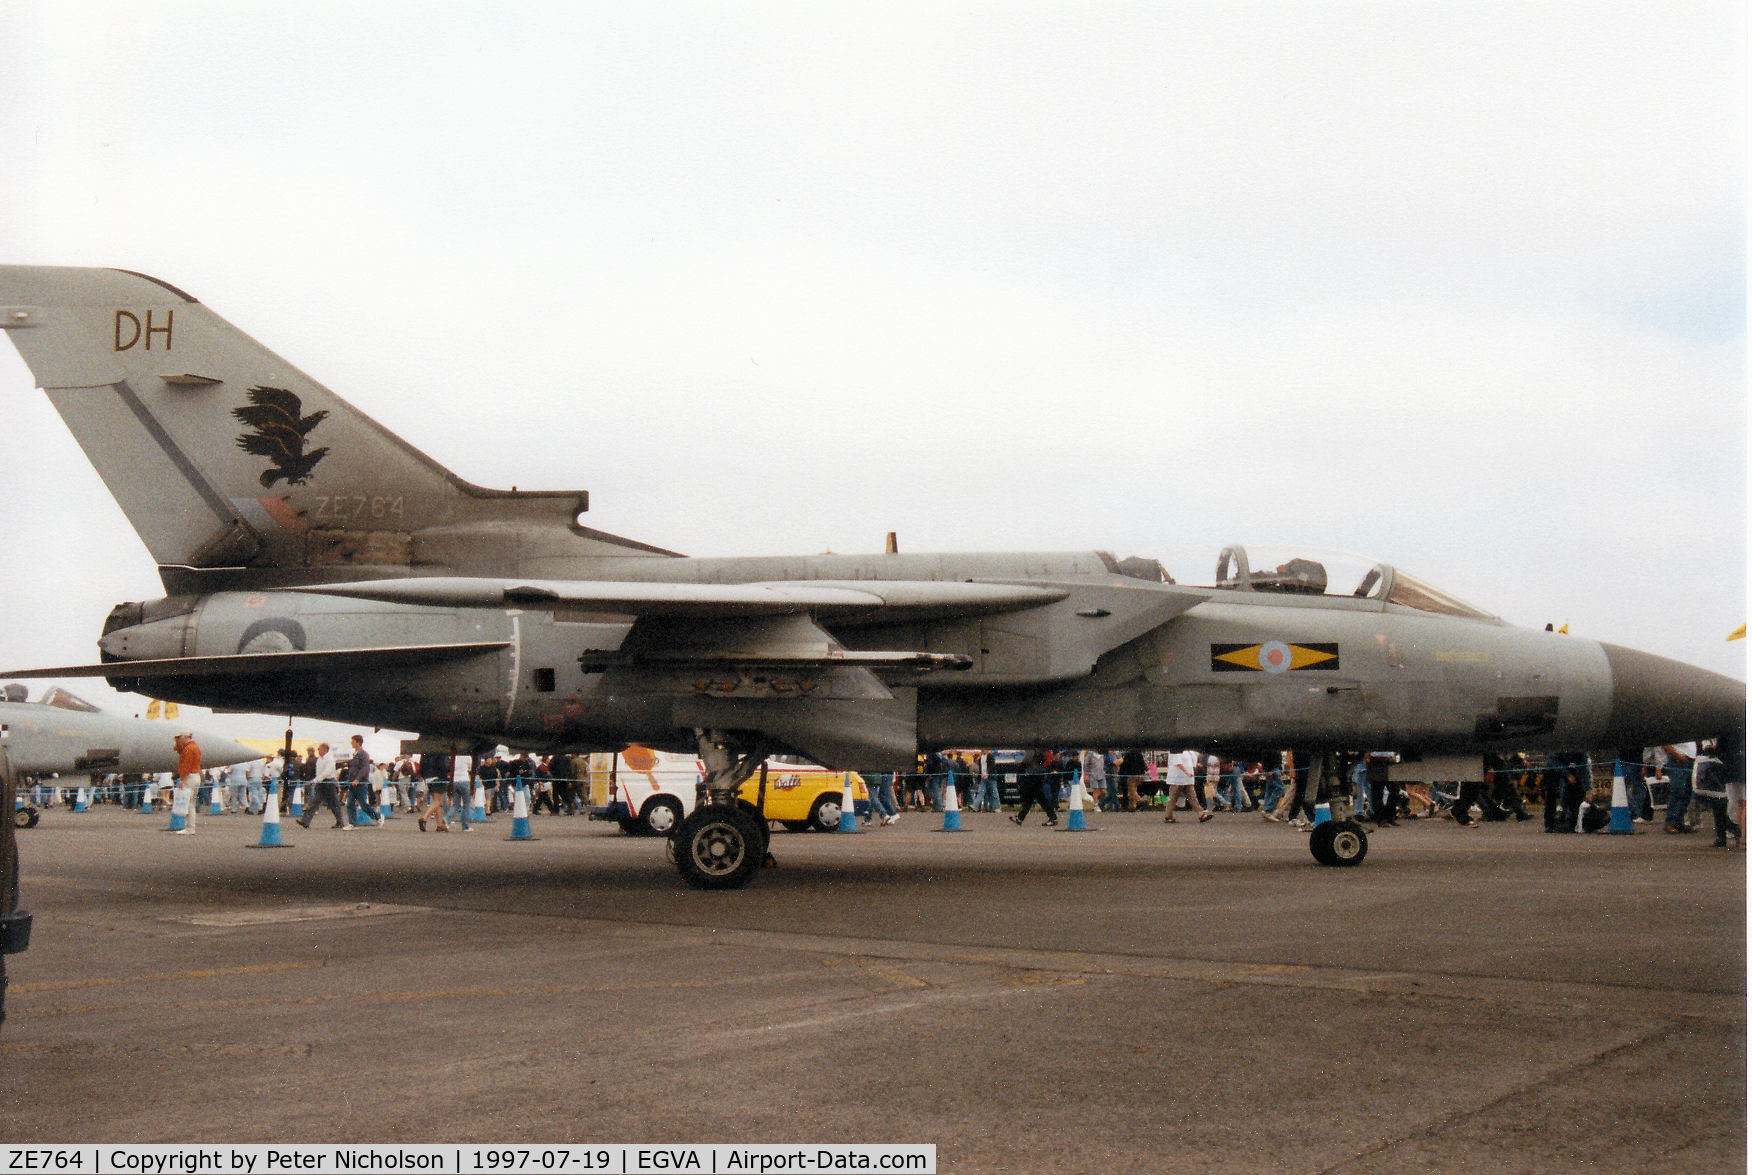 ZE764, 1988 Panavia Tornado F.3 C/N 3311, Tornado F.3, callsign Razor, of 11 Squadron at RAF Leeming on display at the 1997 Intnl Air Tattoo at RAF Fairford.